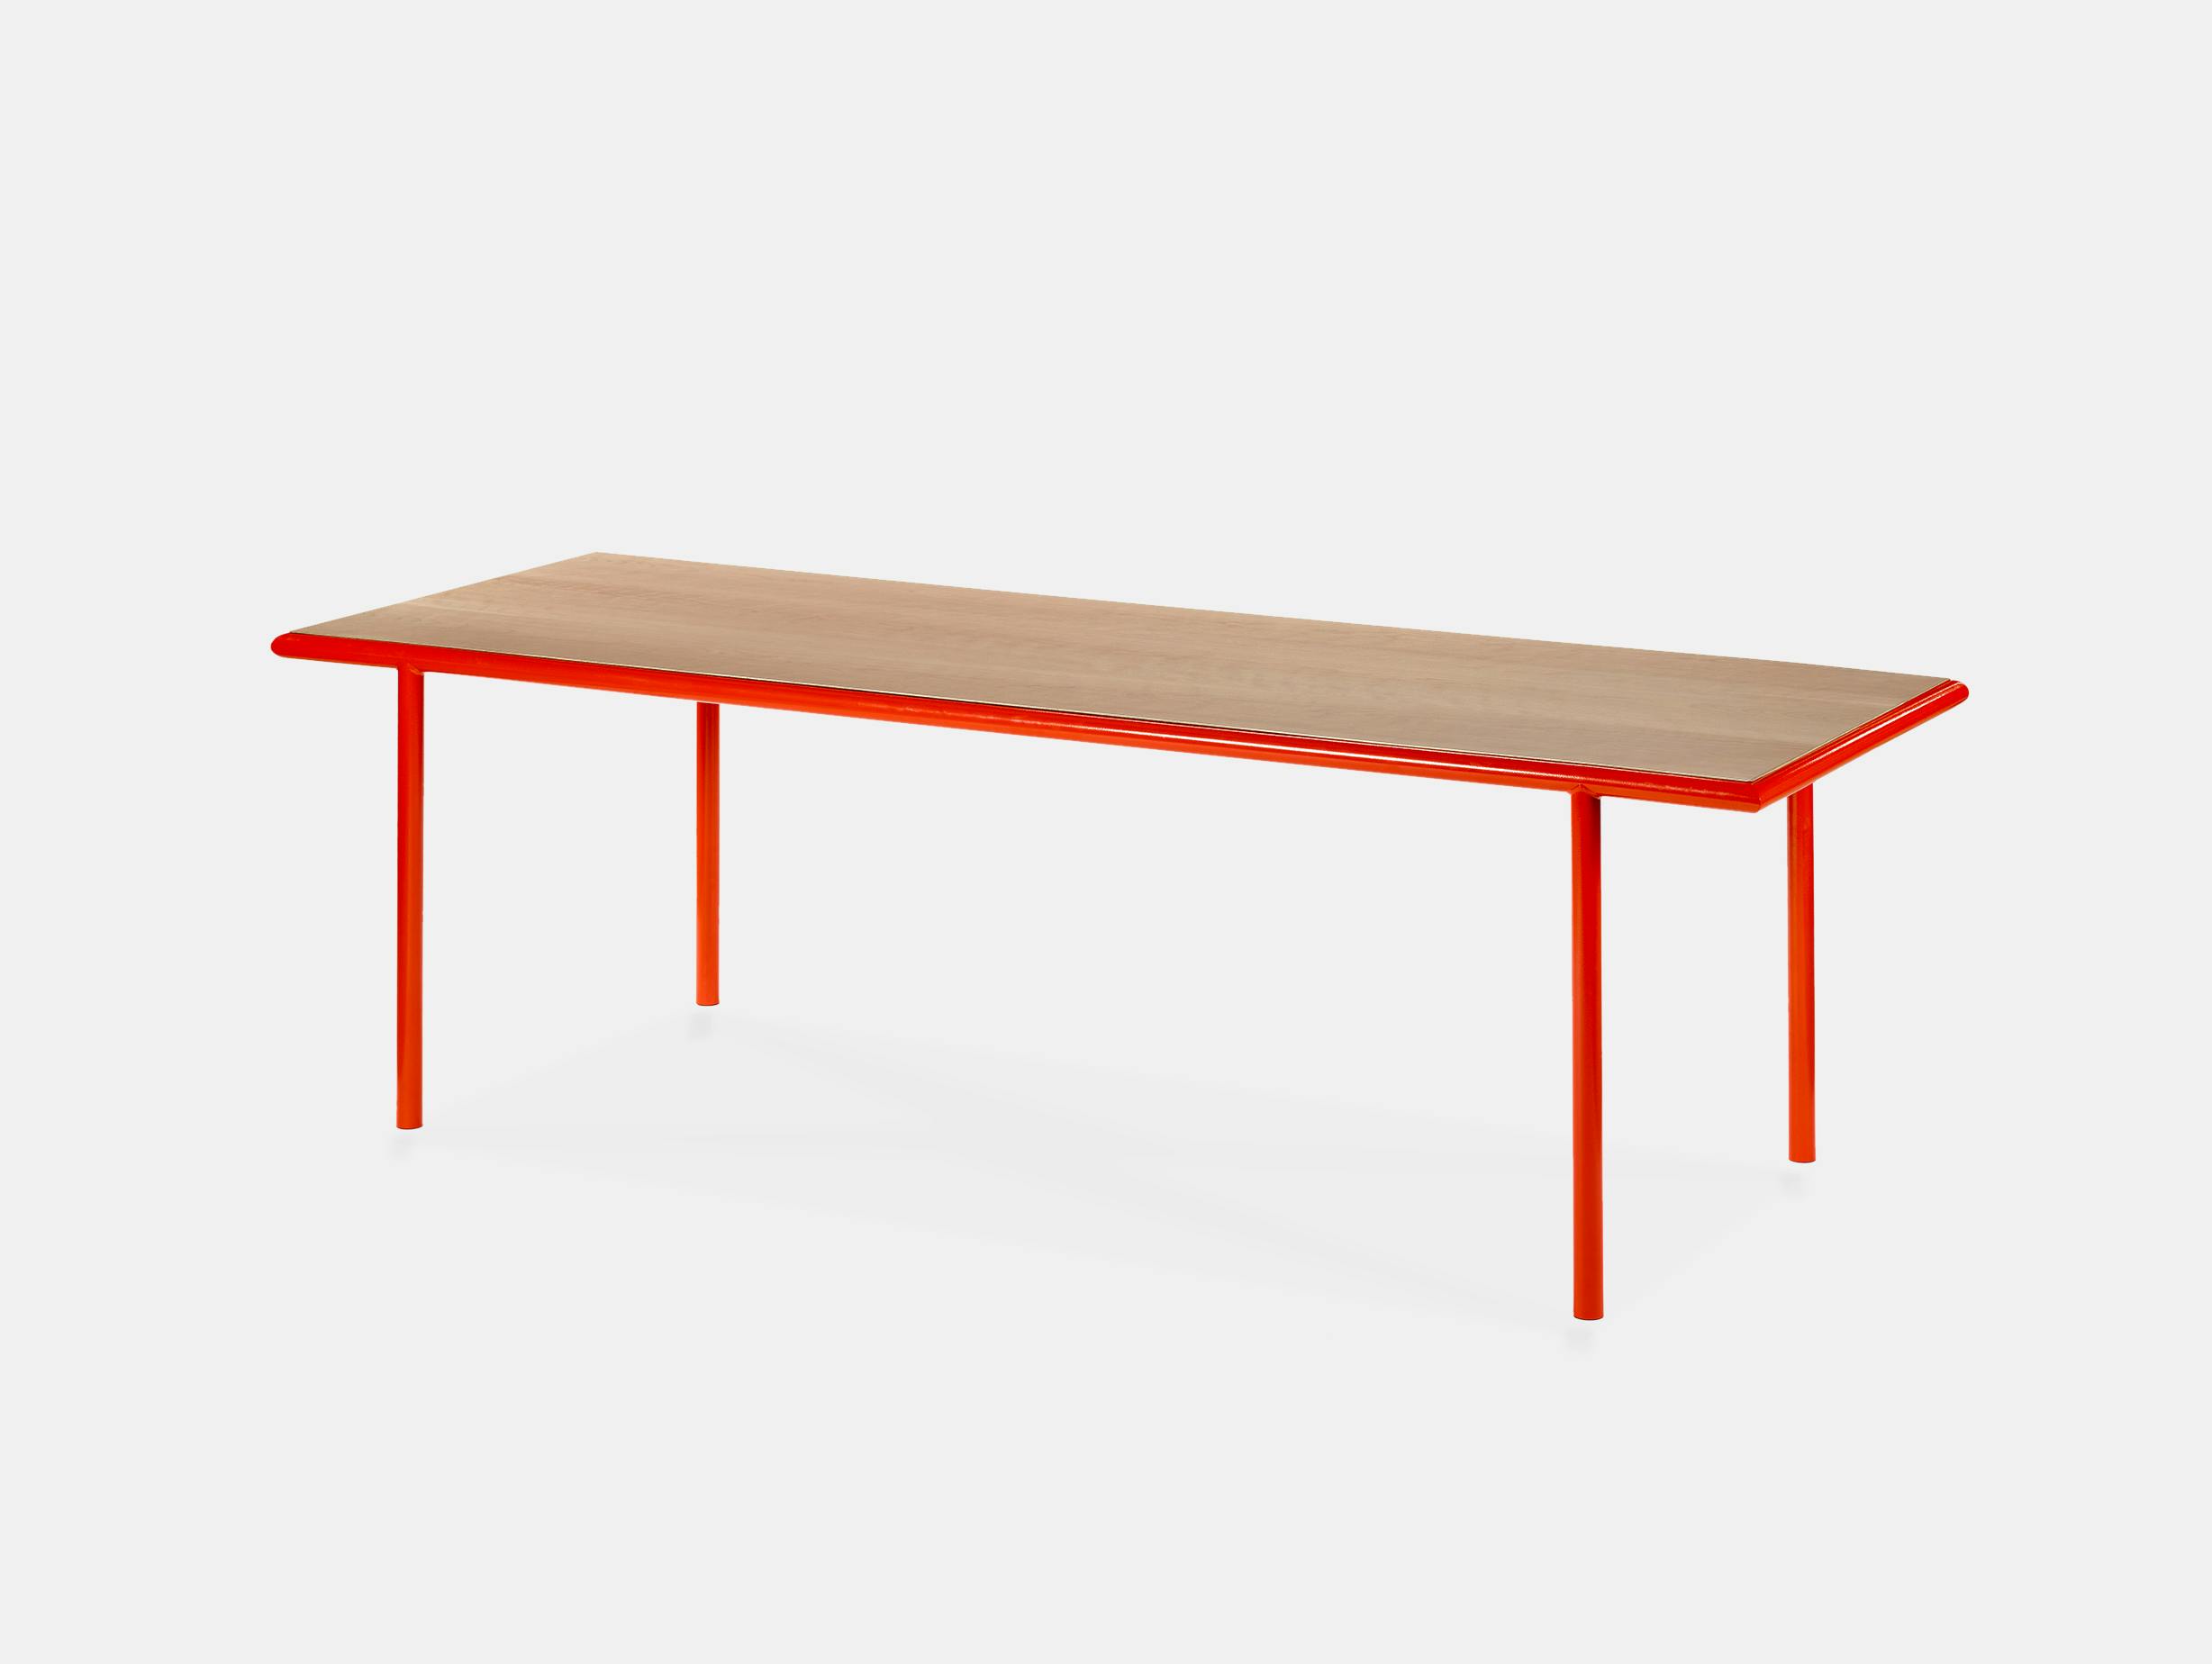 Muller van severen wooden table rectangular red cherry